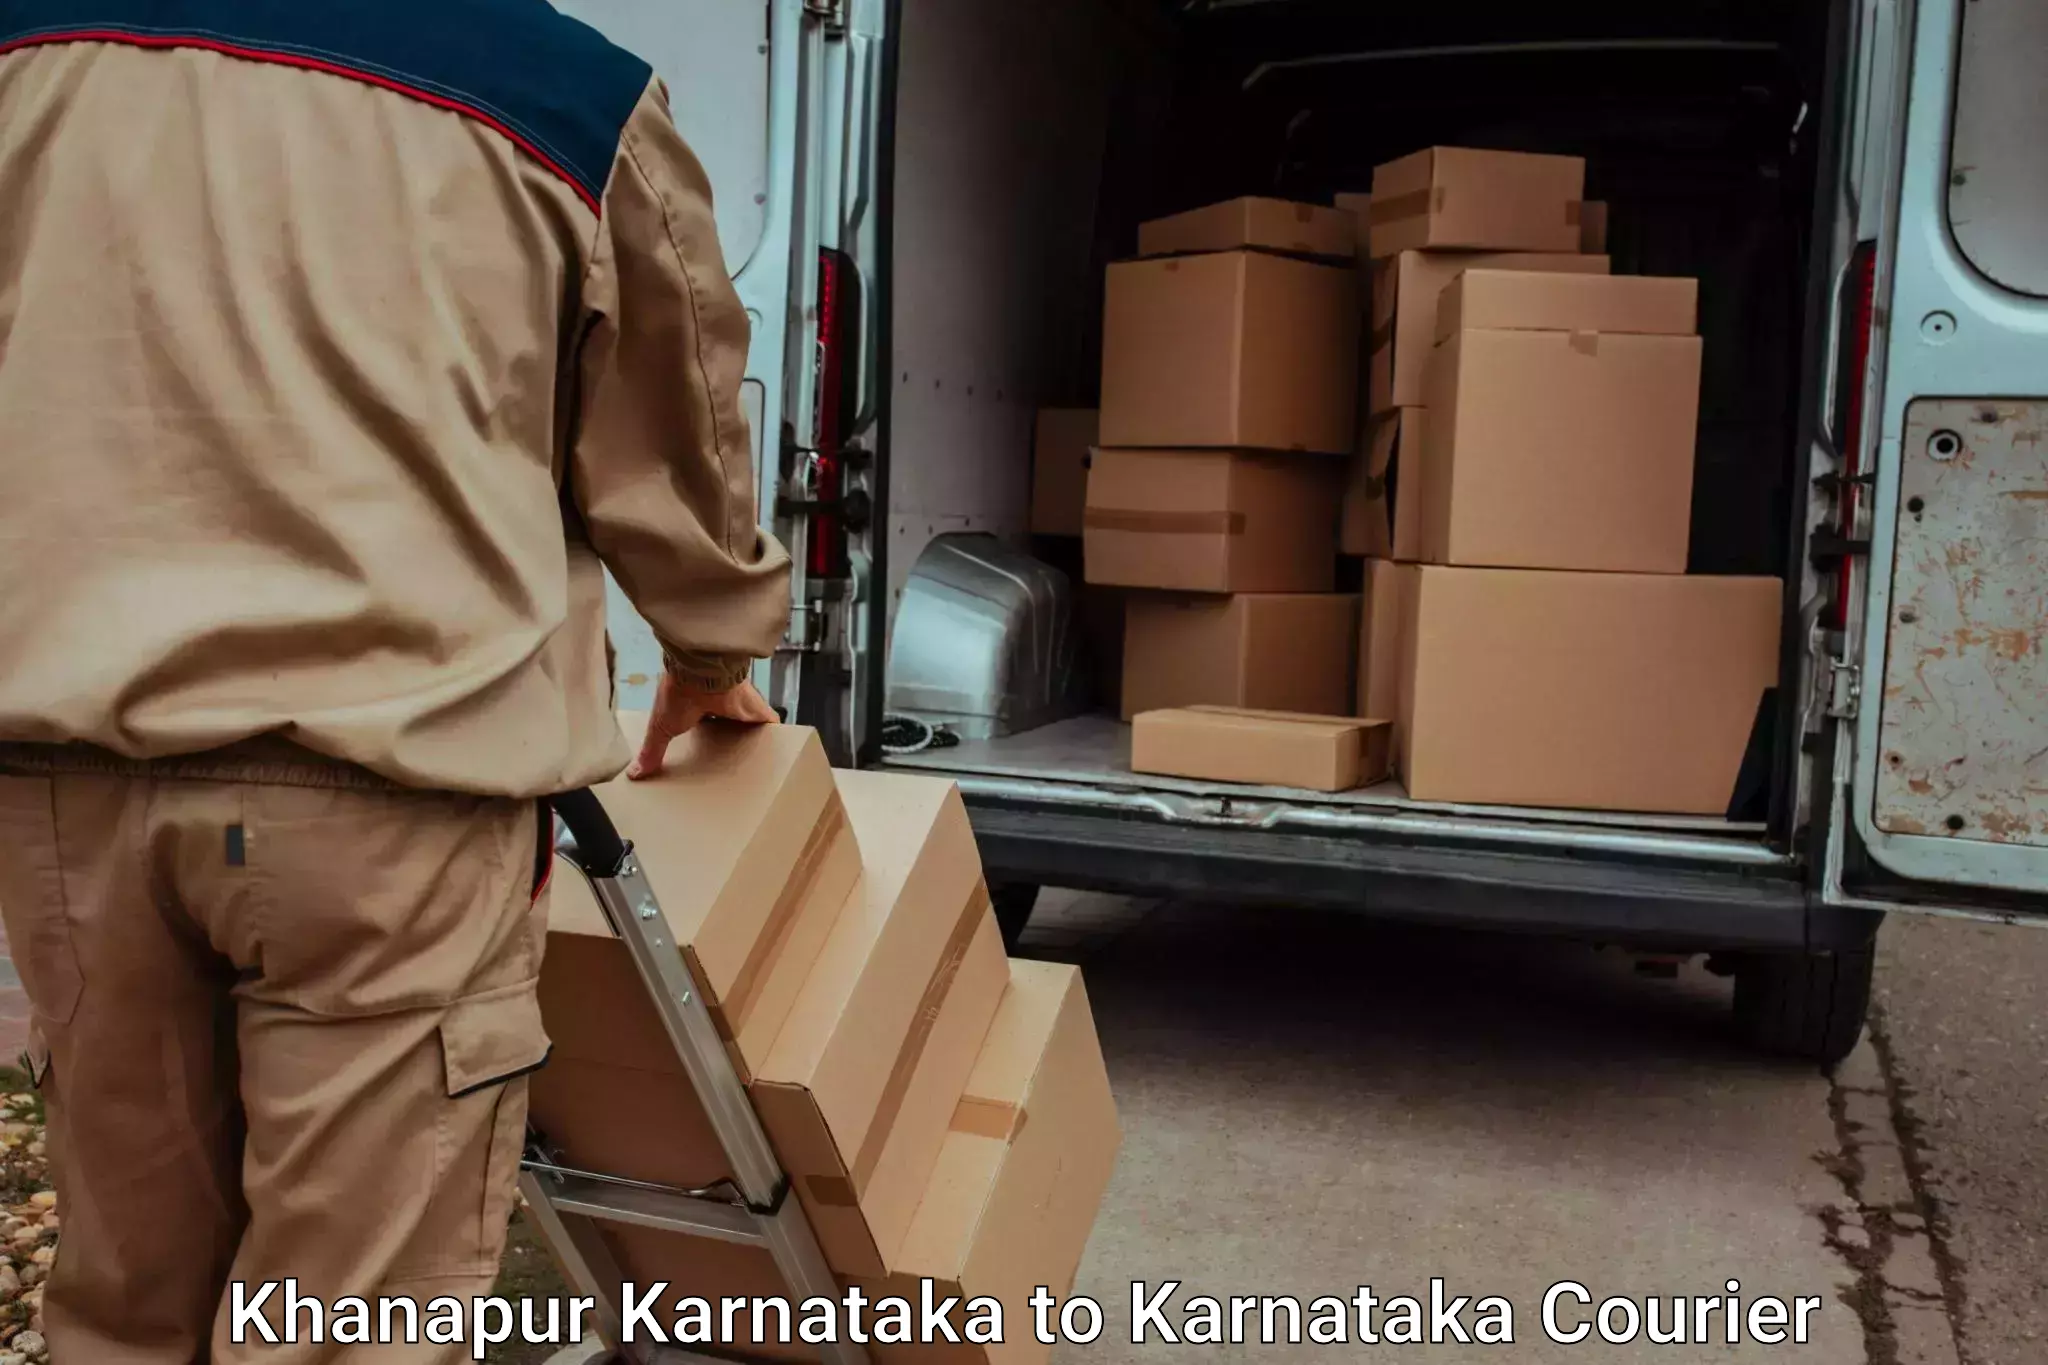 Furniture delivery service Khanapur Karnataka to Ramanagara